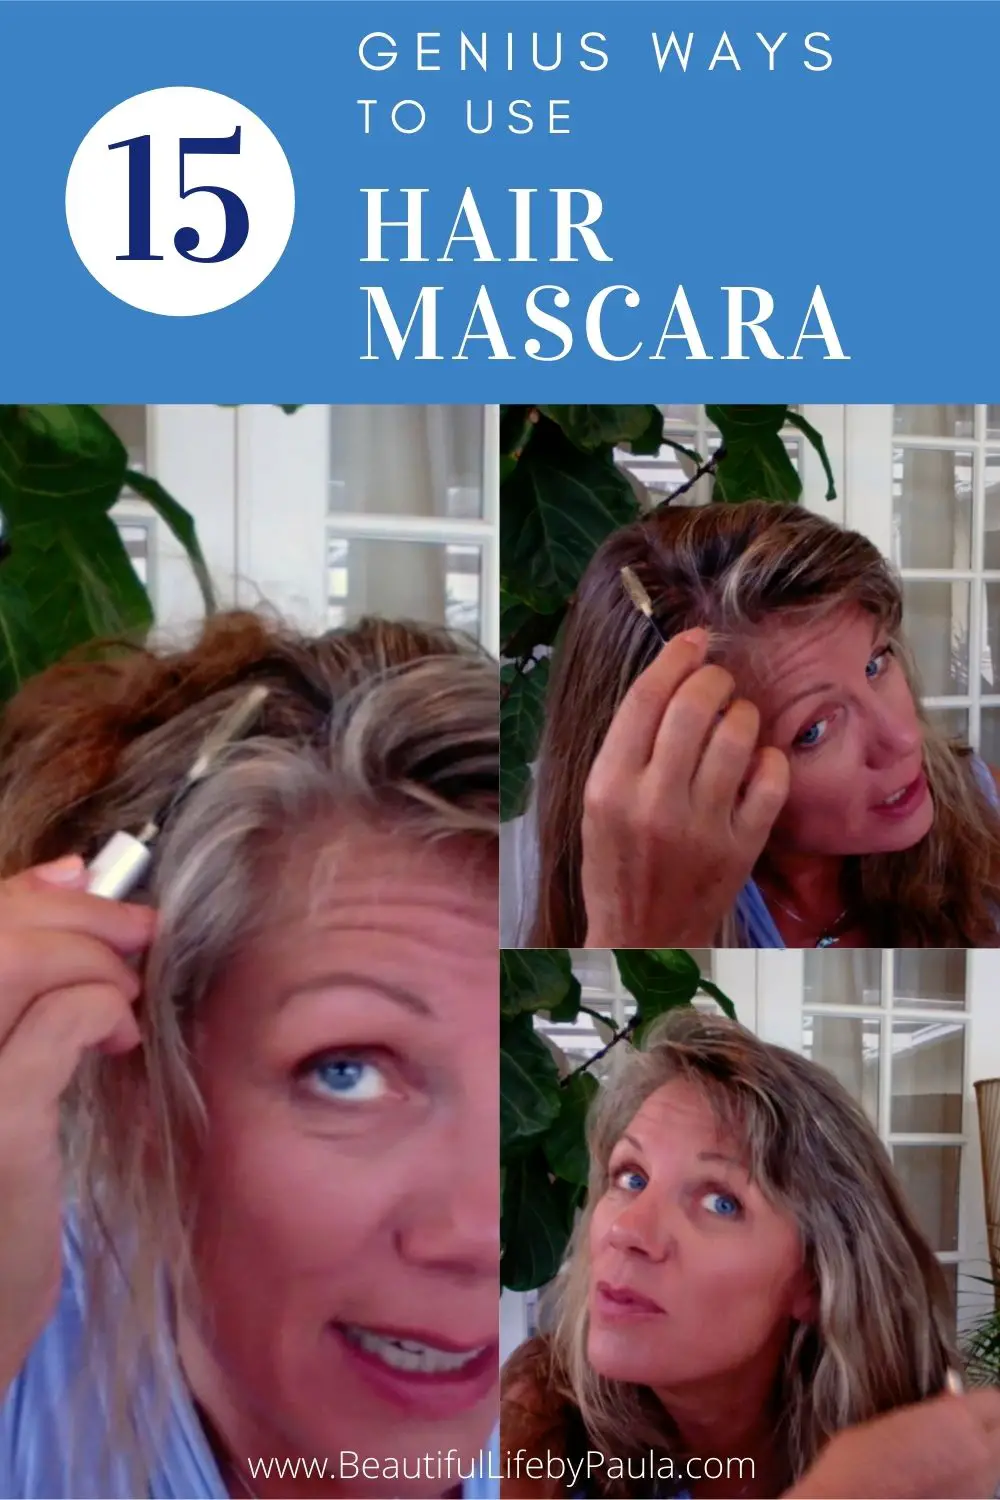 15 genius ways to use hair mascara